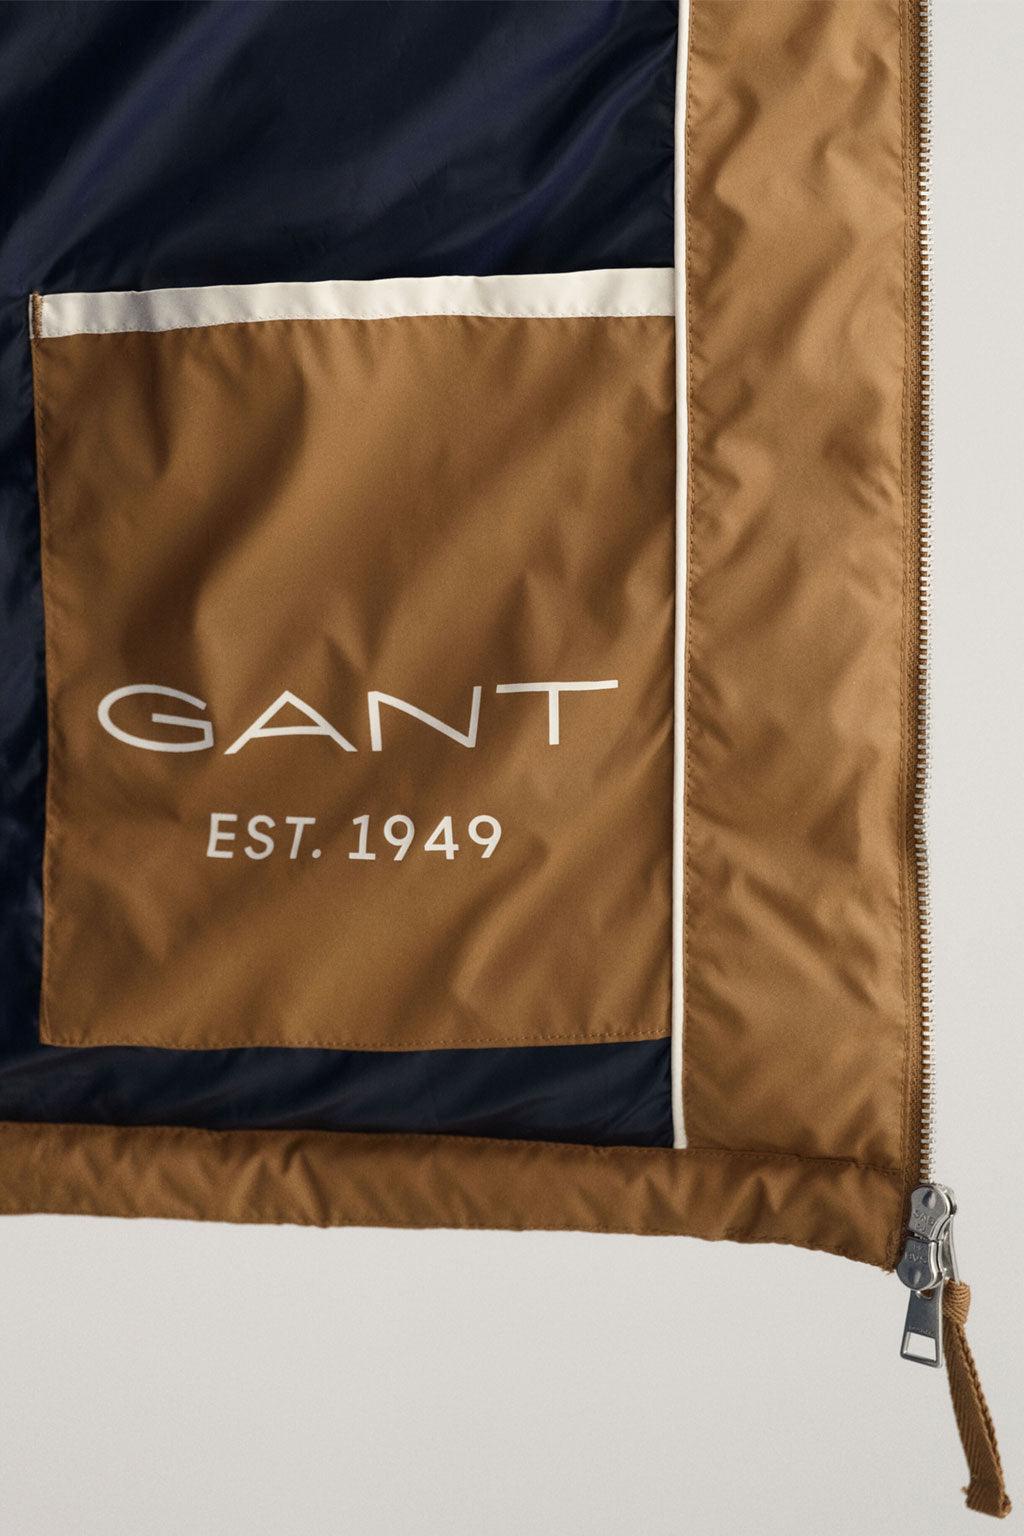 Gant jack | Big Boss | the menswear concept